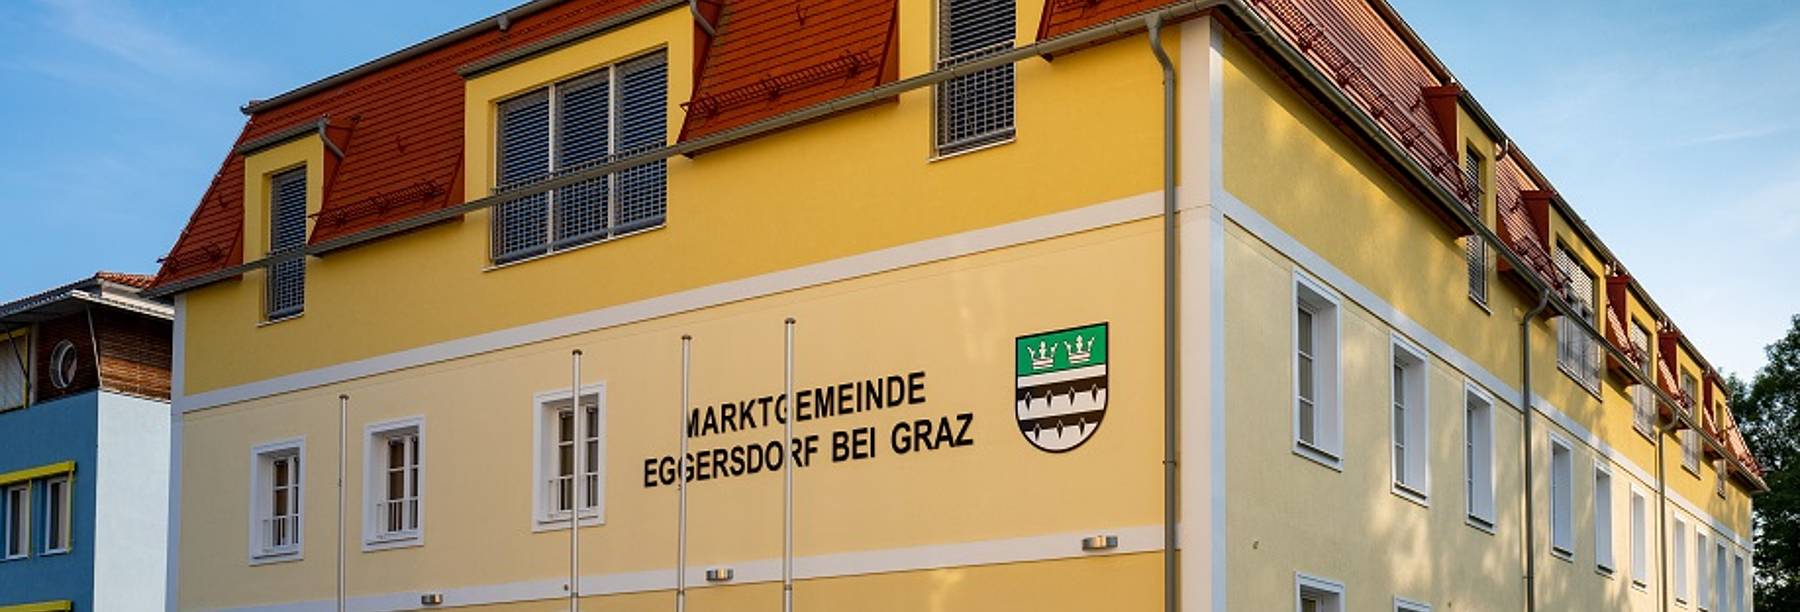 Herzlich Willkommen in Eggersdorf bei Graz